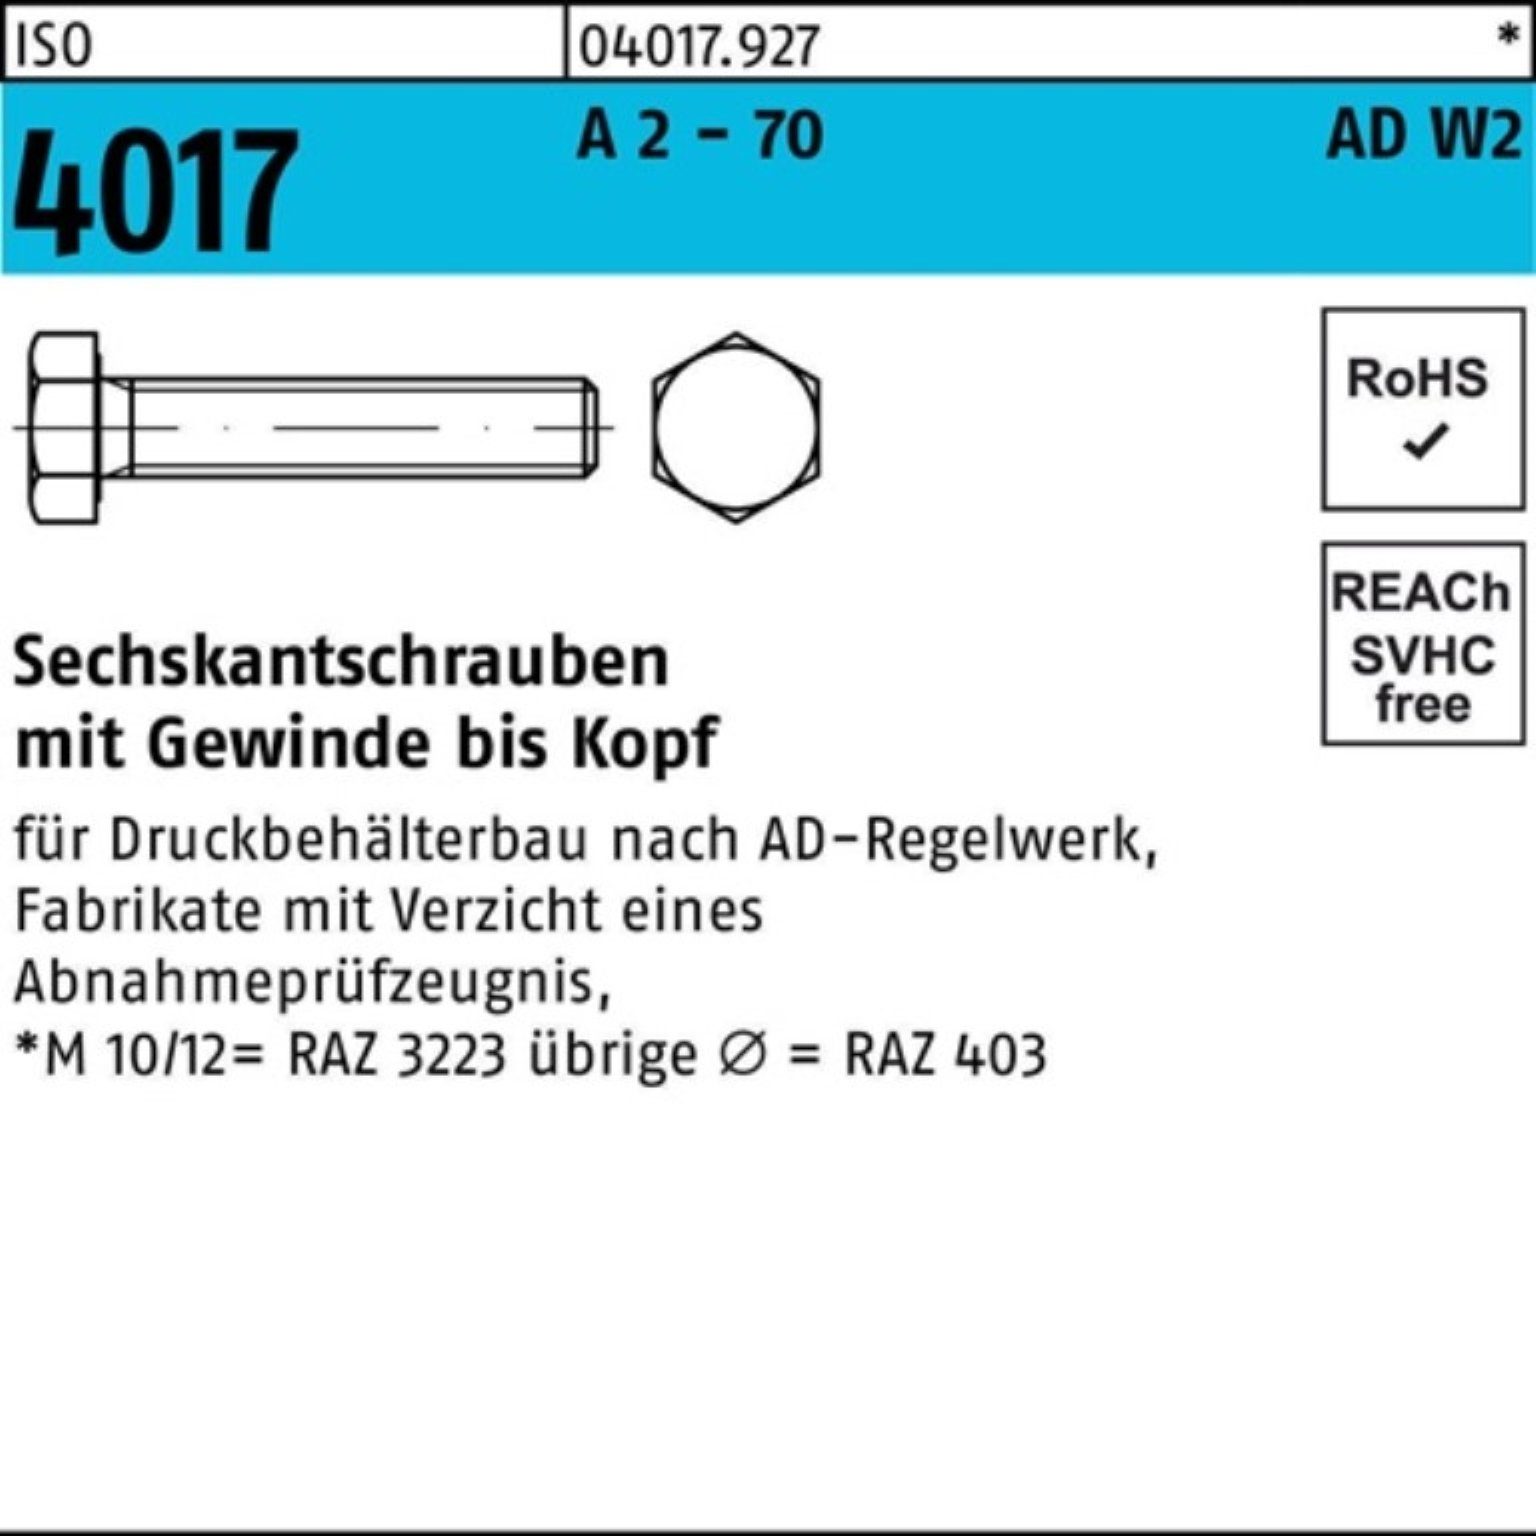 Bufab Sechskantschraube 100er Pack Sechskantschraube St 2 A 50 VG ISO AD-W2 M12x 50 4017 70 